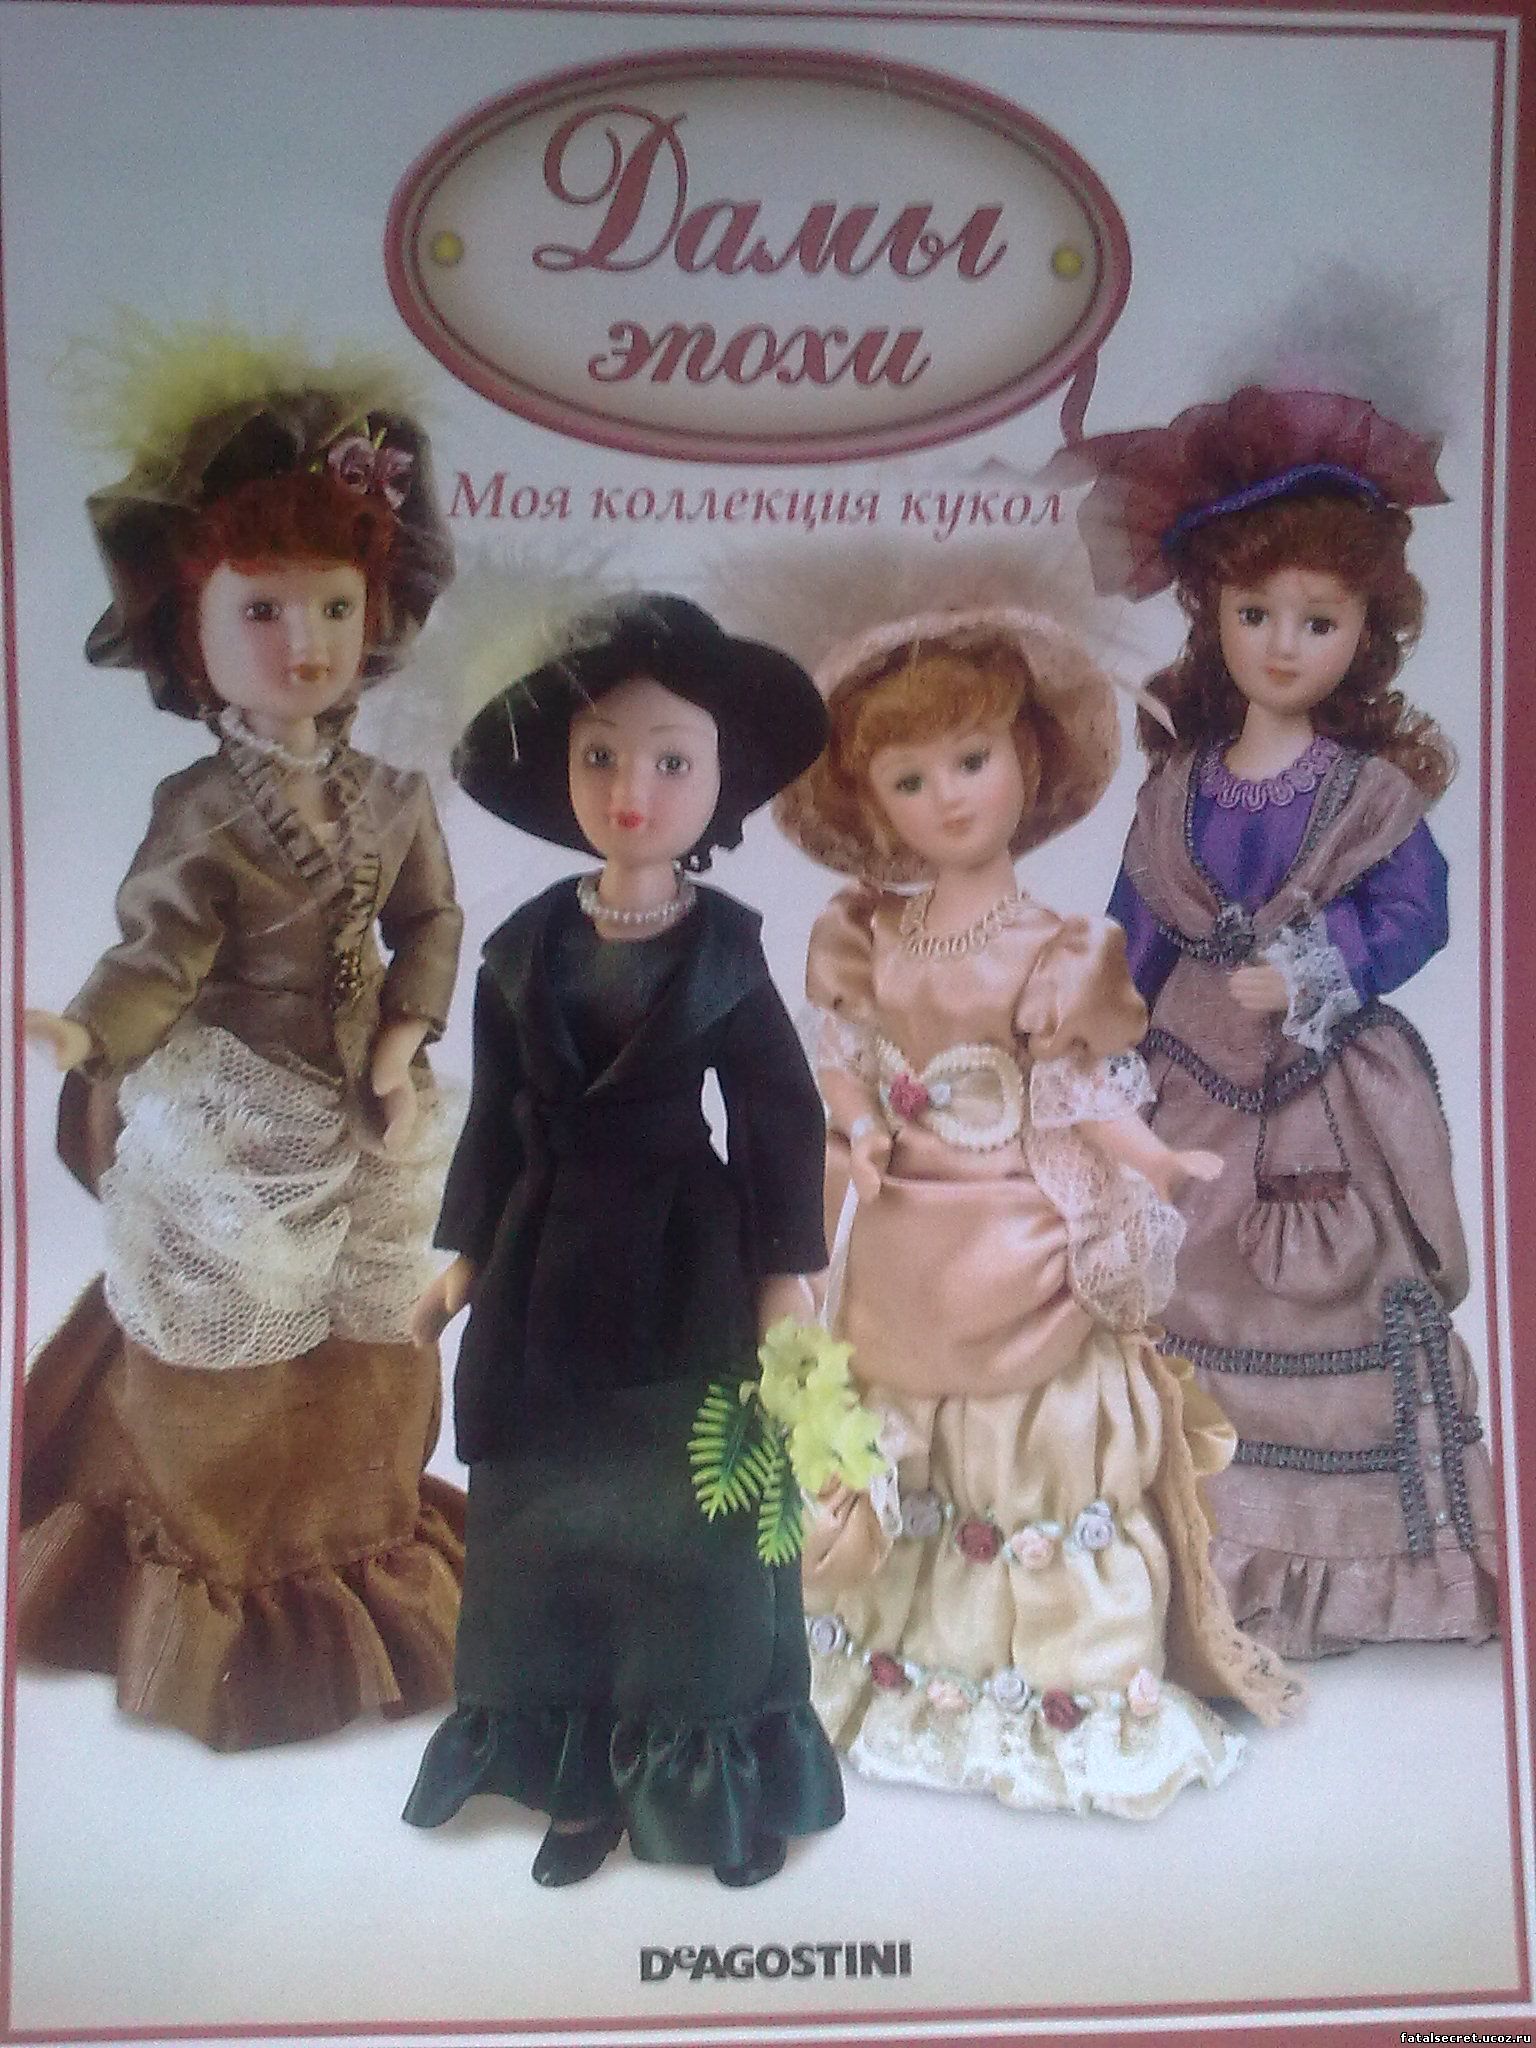 Дамы эпохи список. Куклы дамы эпохи ДЕАГОСТИНИ вся коллекция. Коллекция кукол ДЕАГОСТИНИ Екатерина. Коллекция куклы эпохи героиня Дюма. Дамы эпохи моя коллекция кукол.